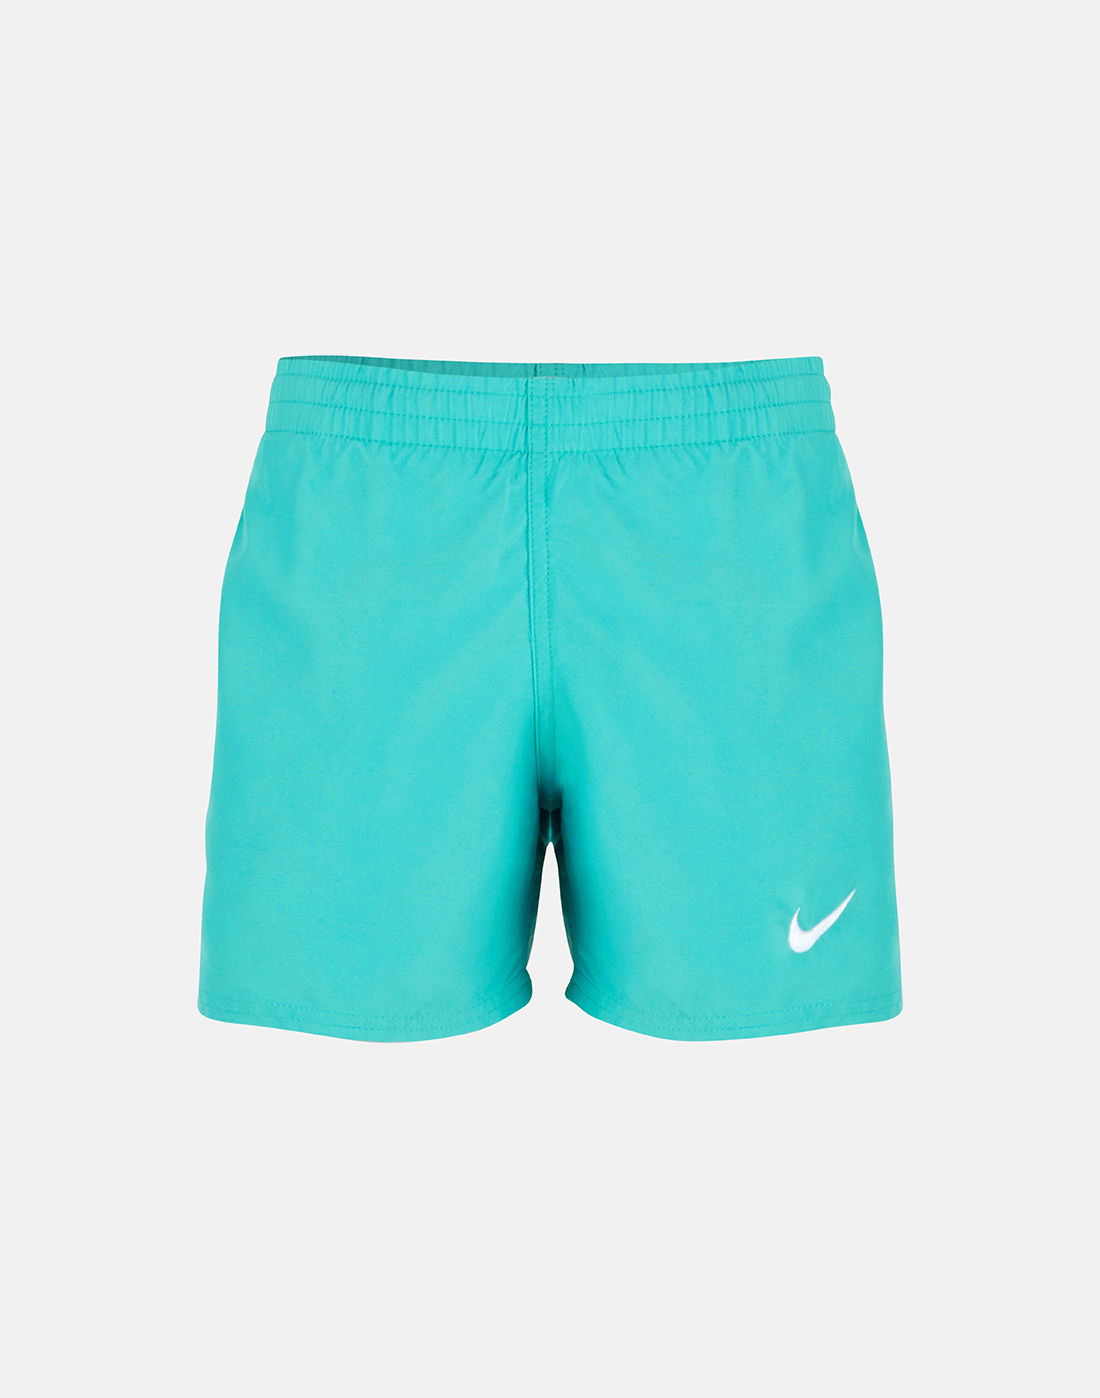 Nike Older Boys 4 Inch Swim Shorts - Green | Life Style Sports EU